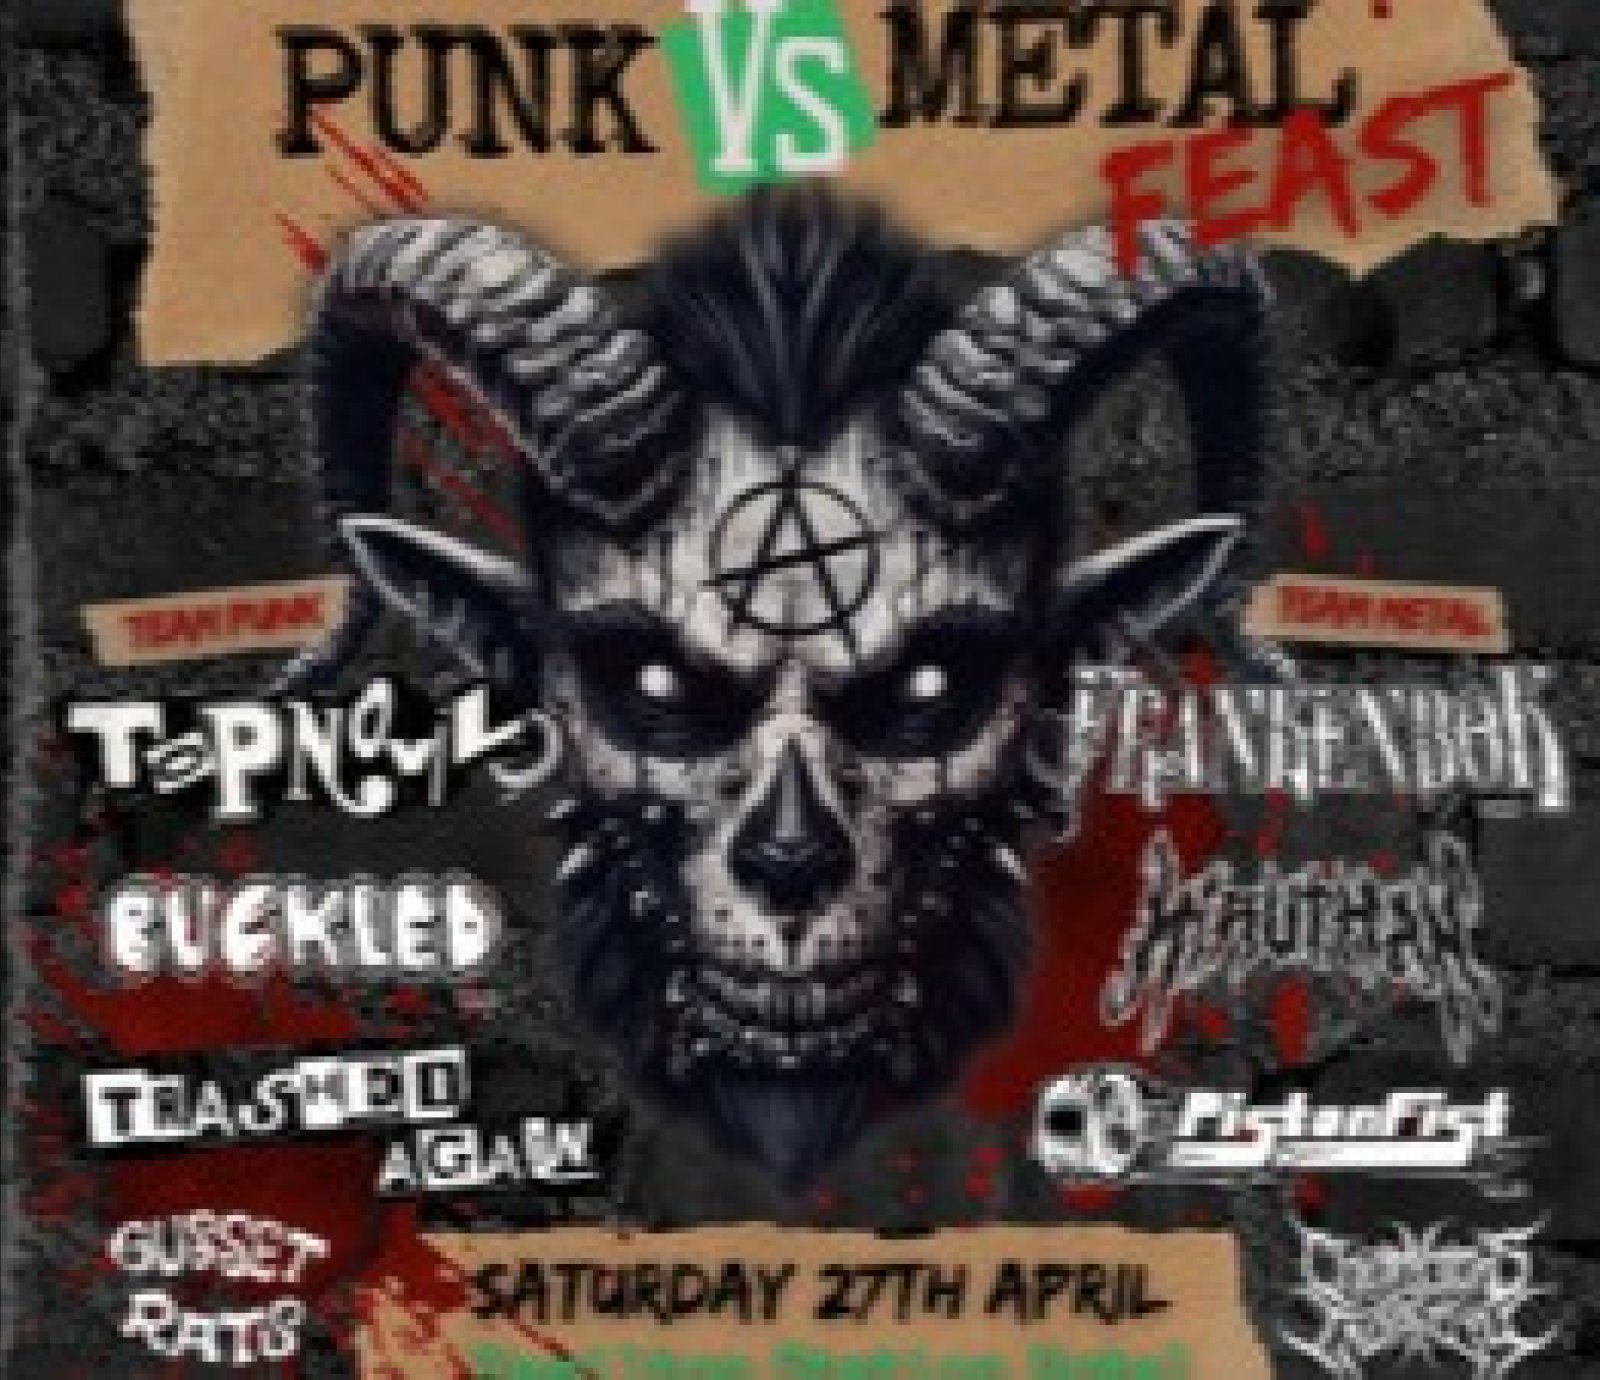 Punk VS Metal Feast